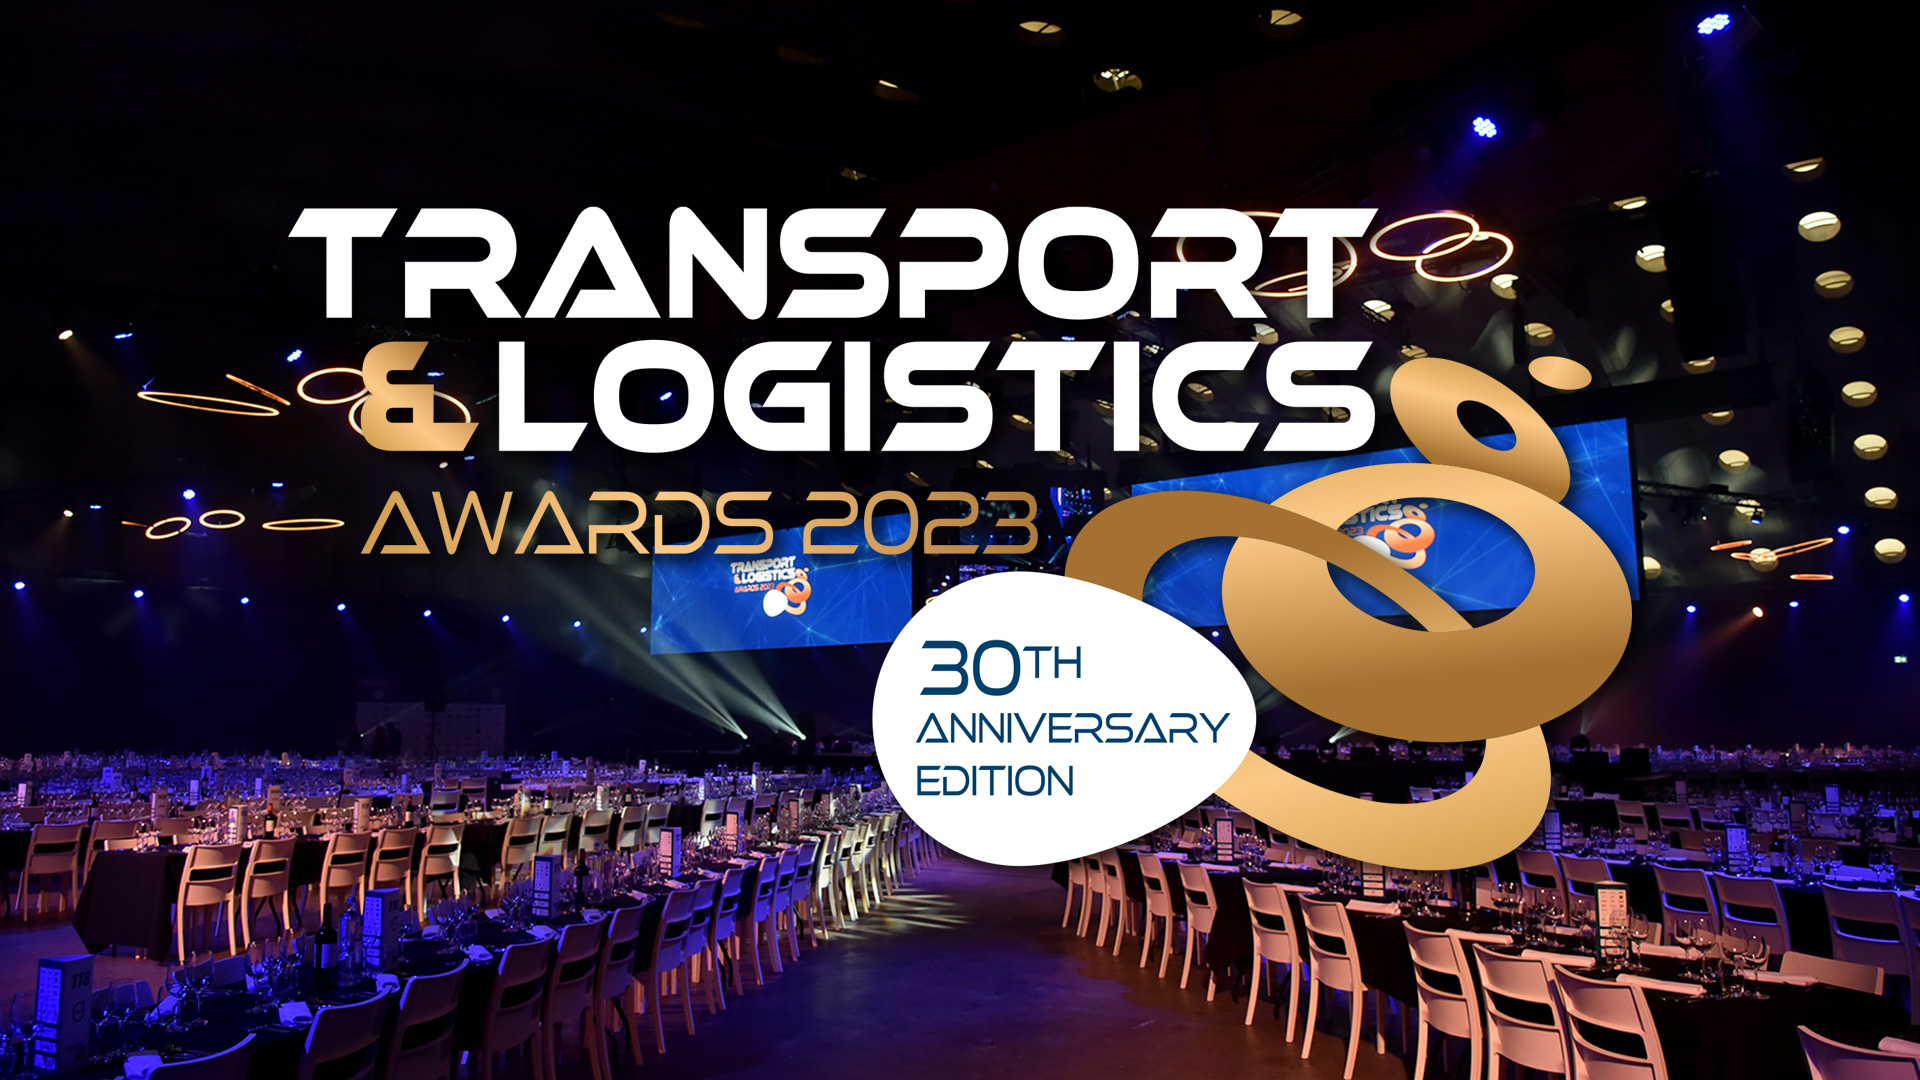 Transport & Logistics Awards 2023 Transportmedia